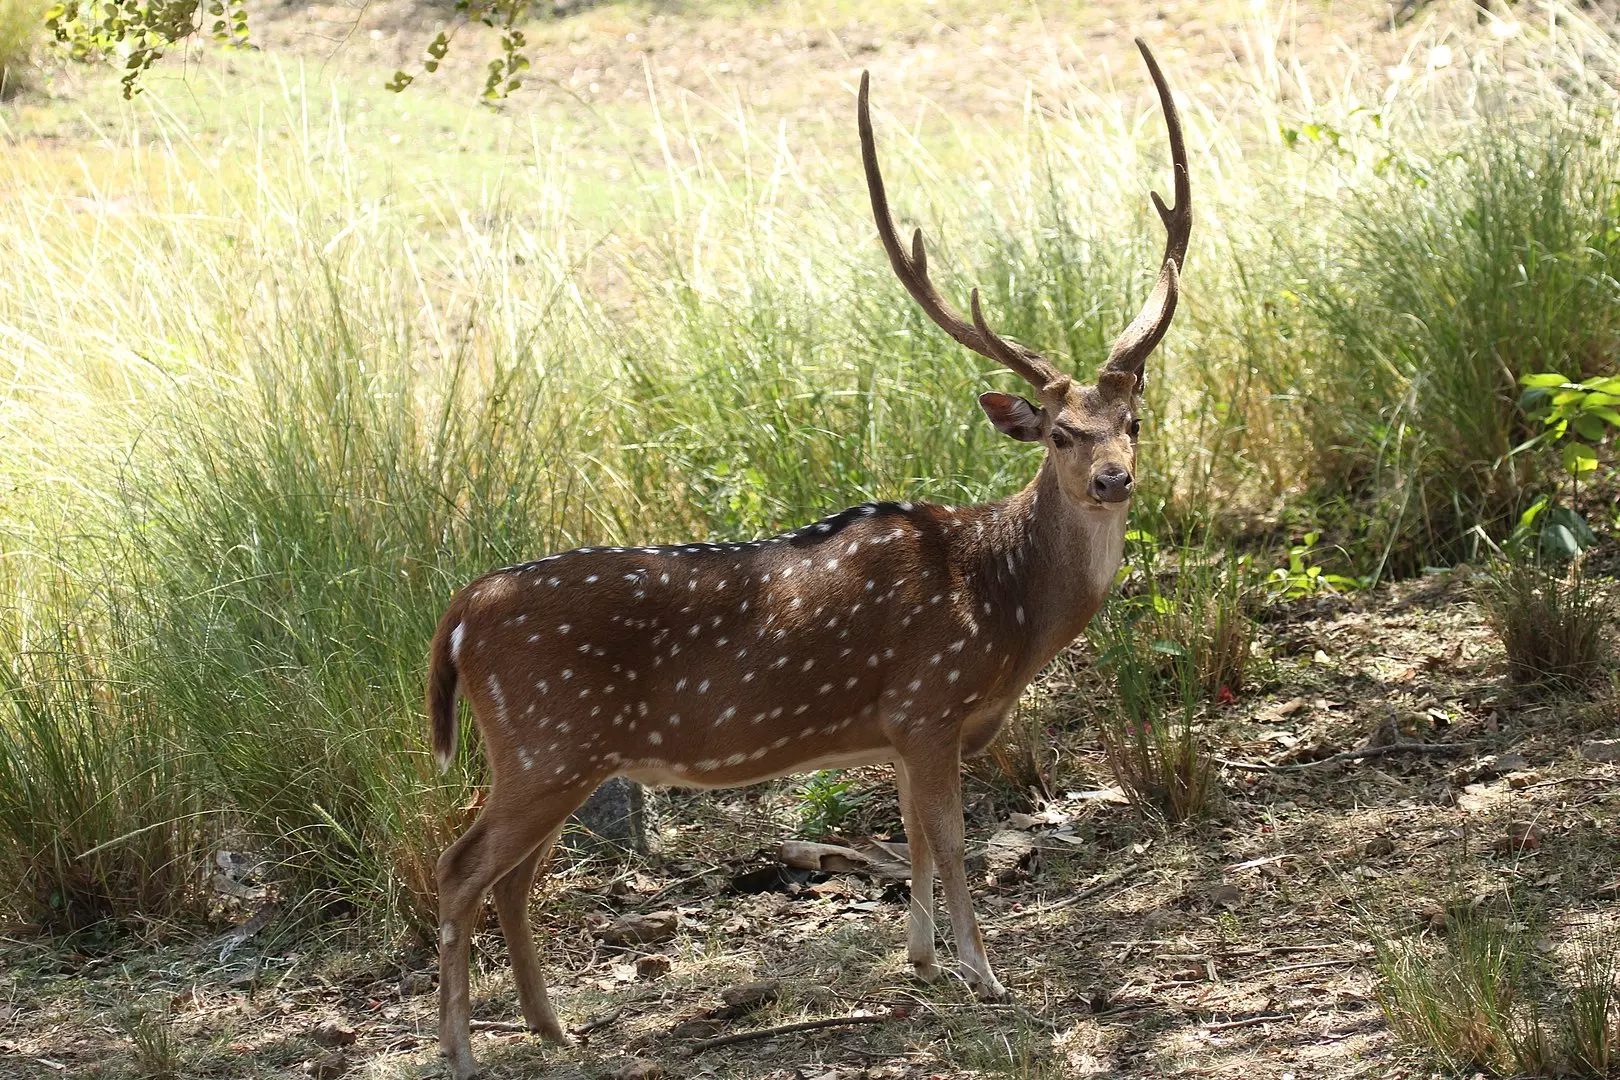 16 deer die at Bengaluru Biological Park; Forest Minister puts zoos on high alert